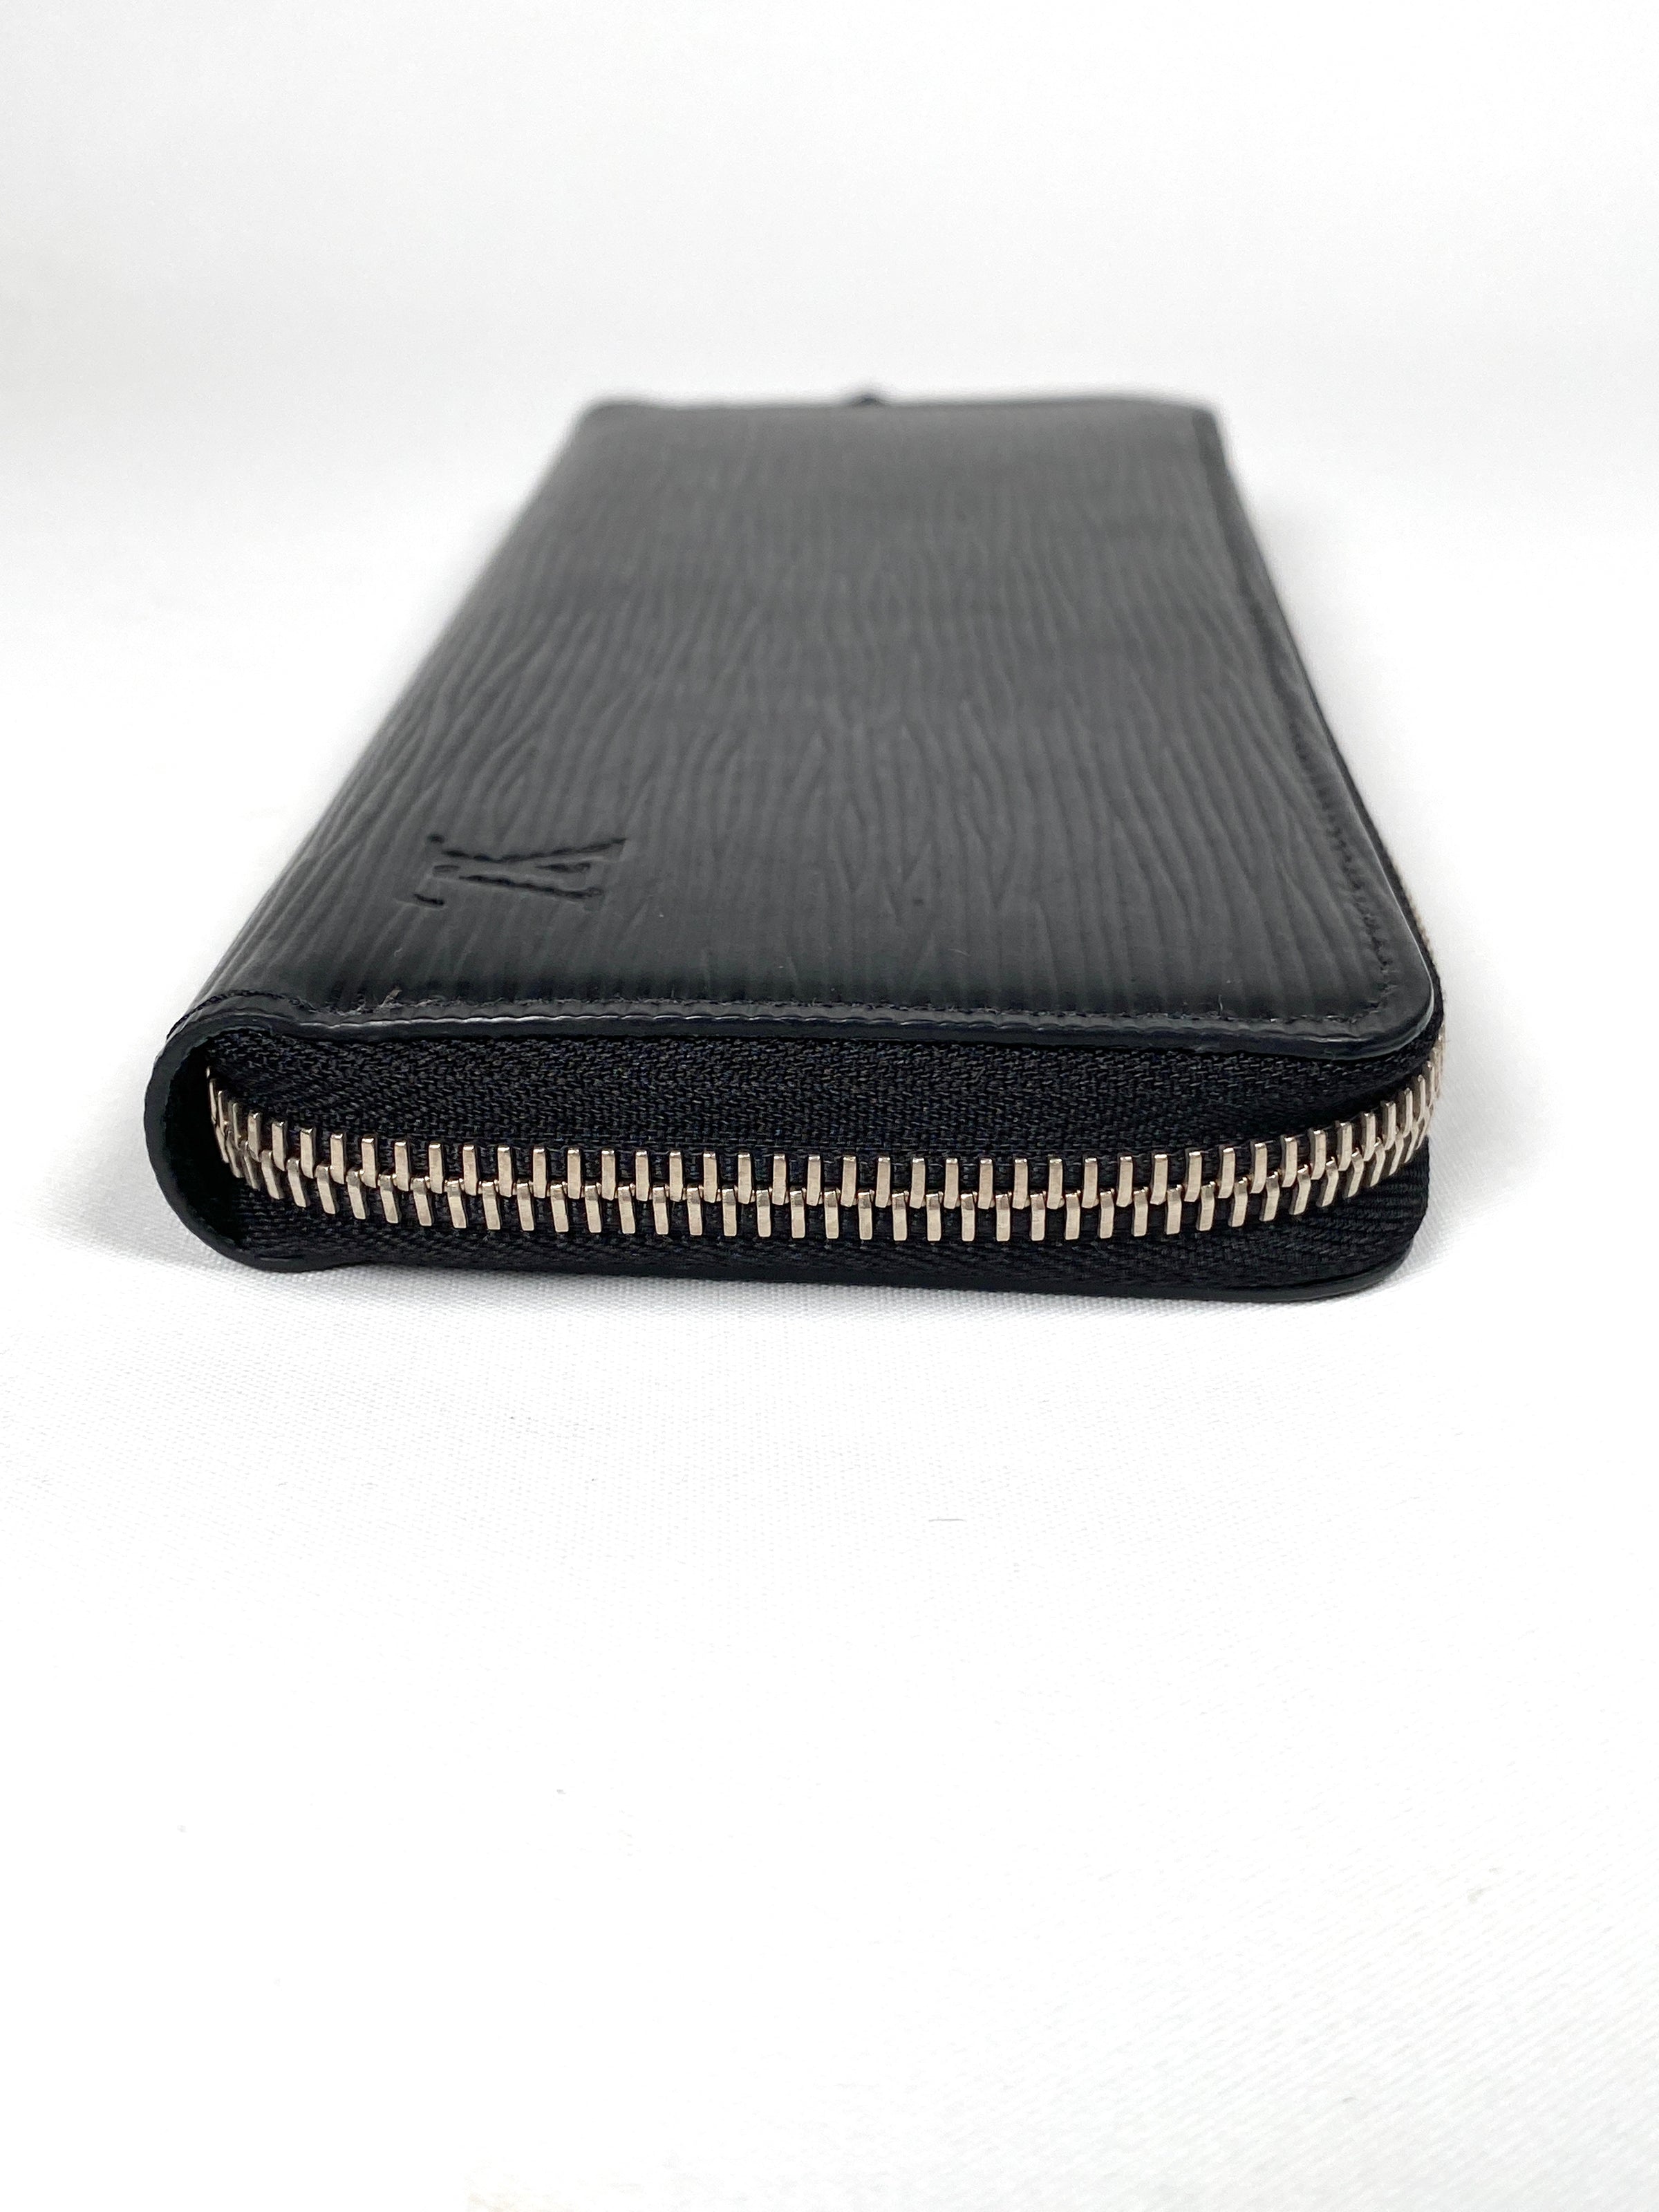 Louis Vuitton Clemence Wallet Black Epi